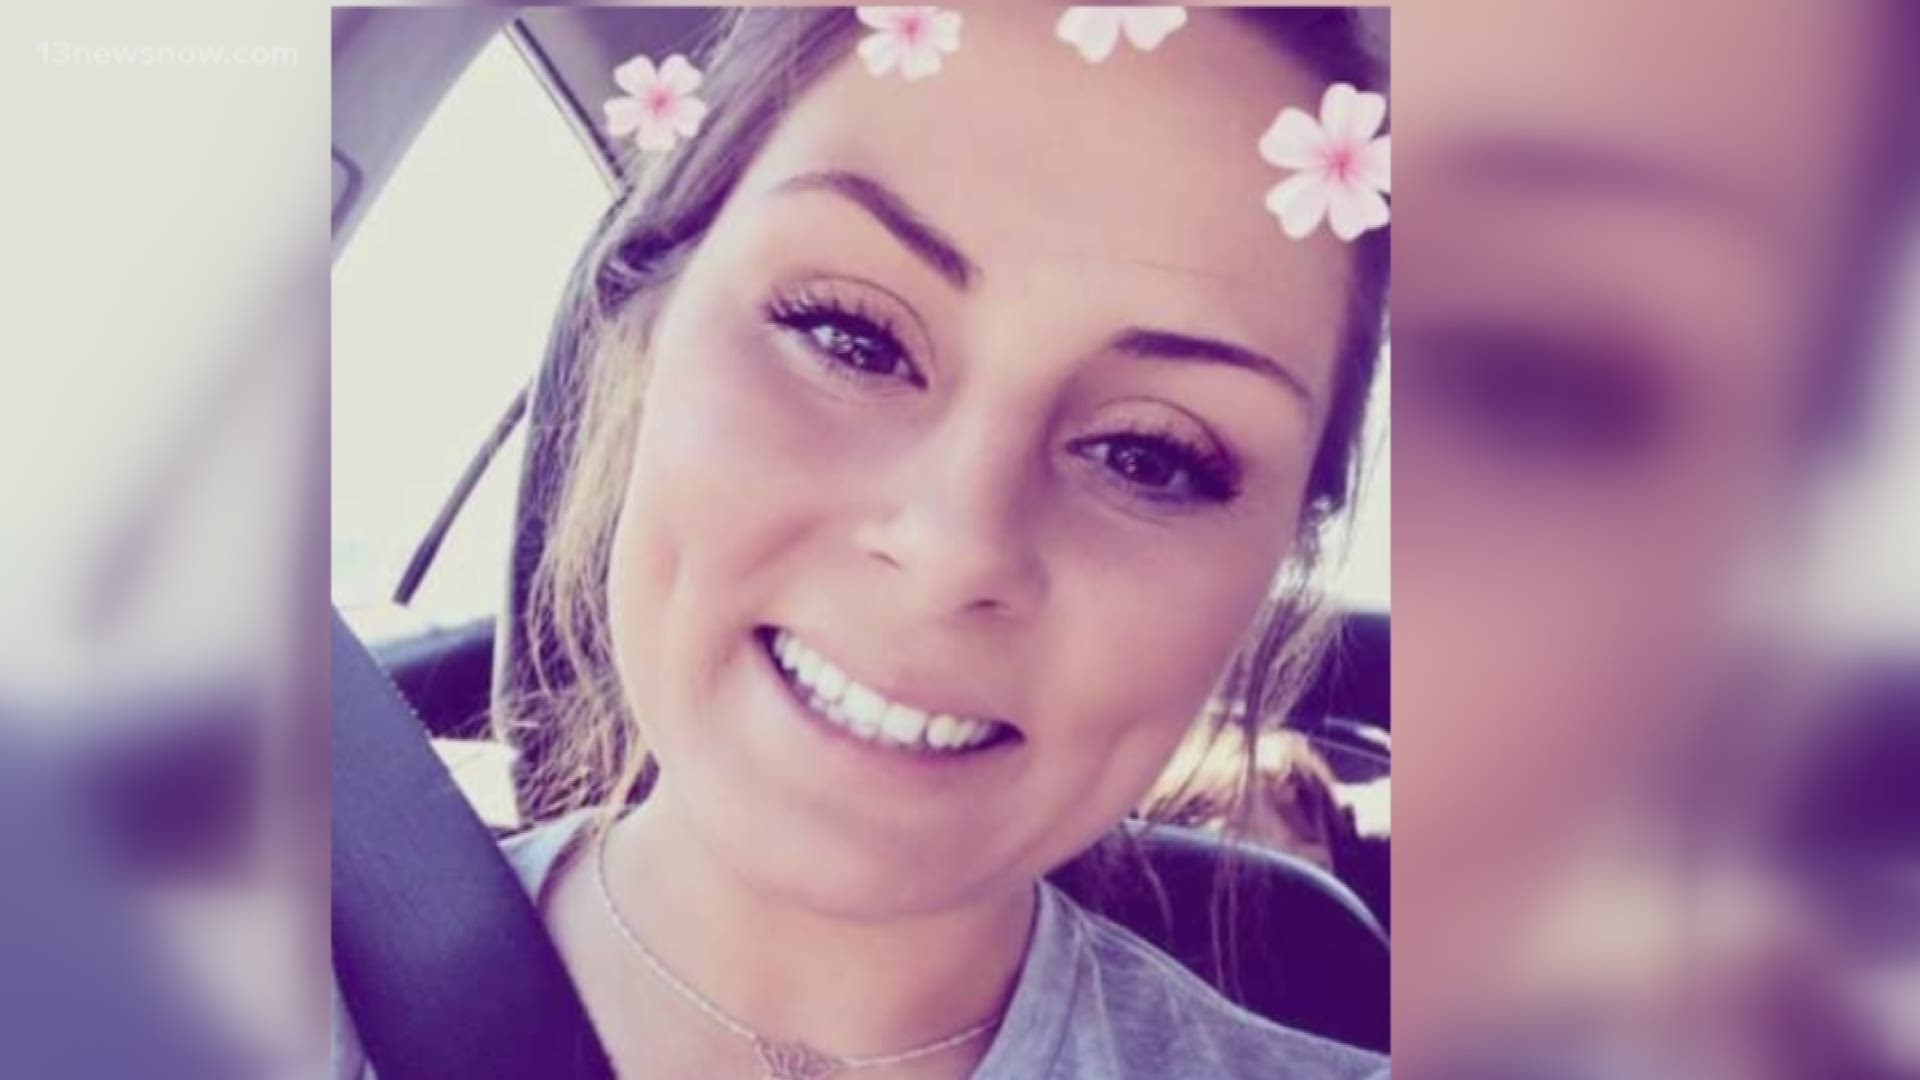 Victoria Jones, 25, was last seen on June 15 at 10 a.m.